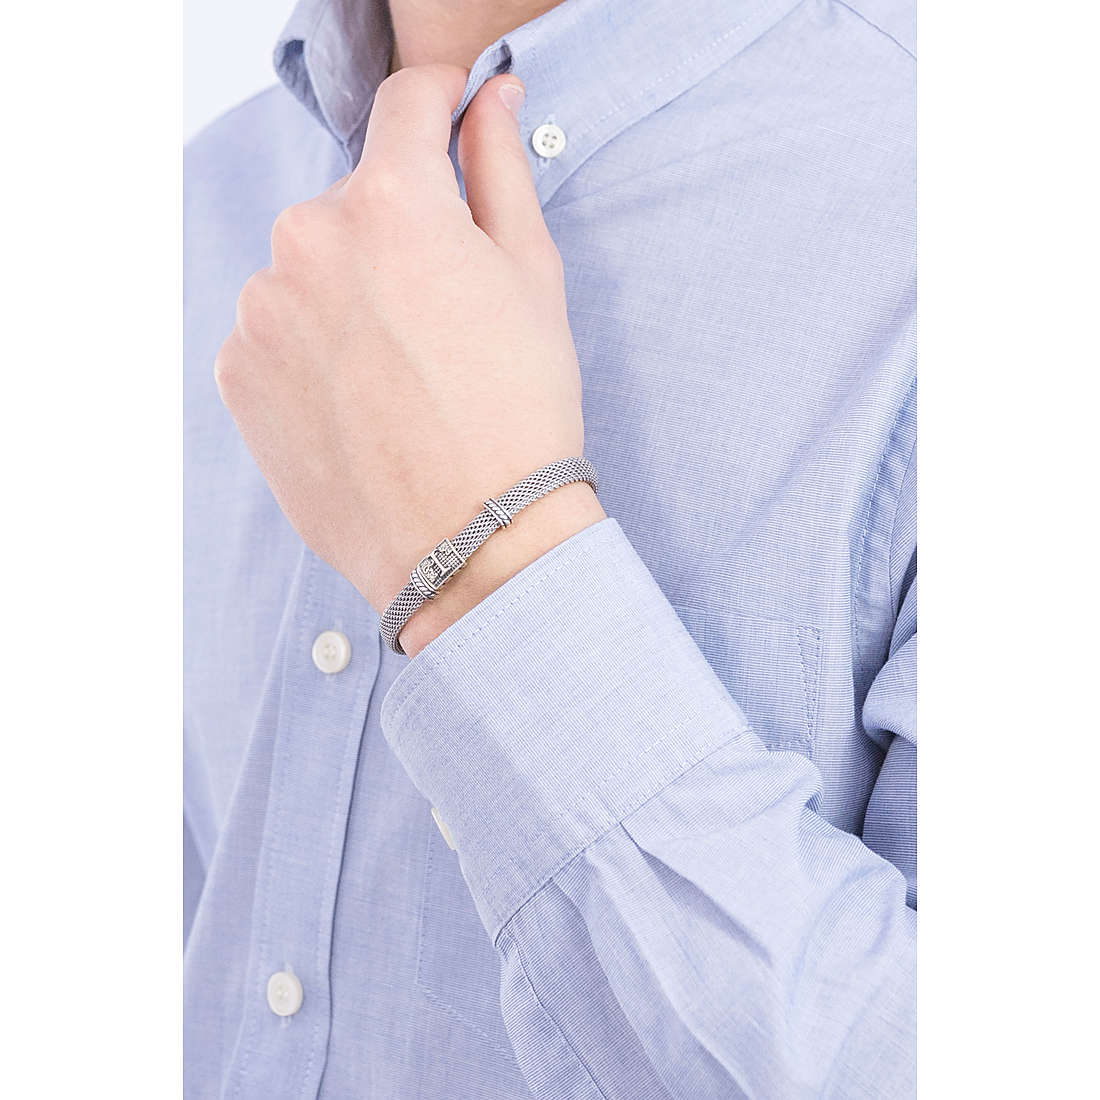 Cesare Paciotti bracelets Silver Initial man JPNC1904M4 wearing